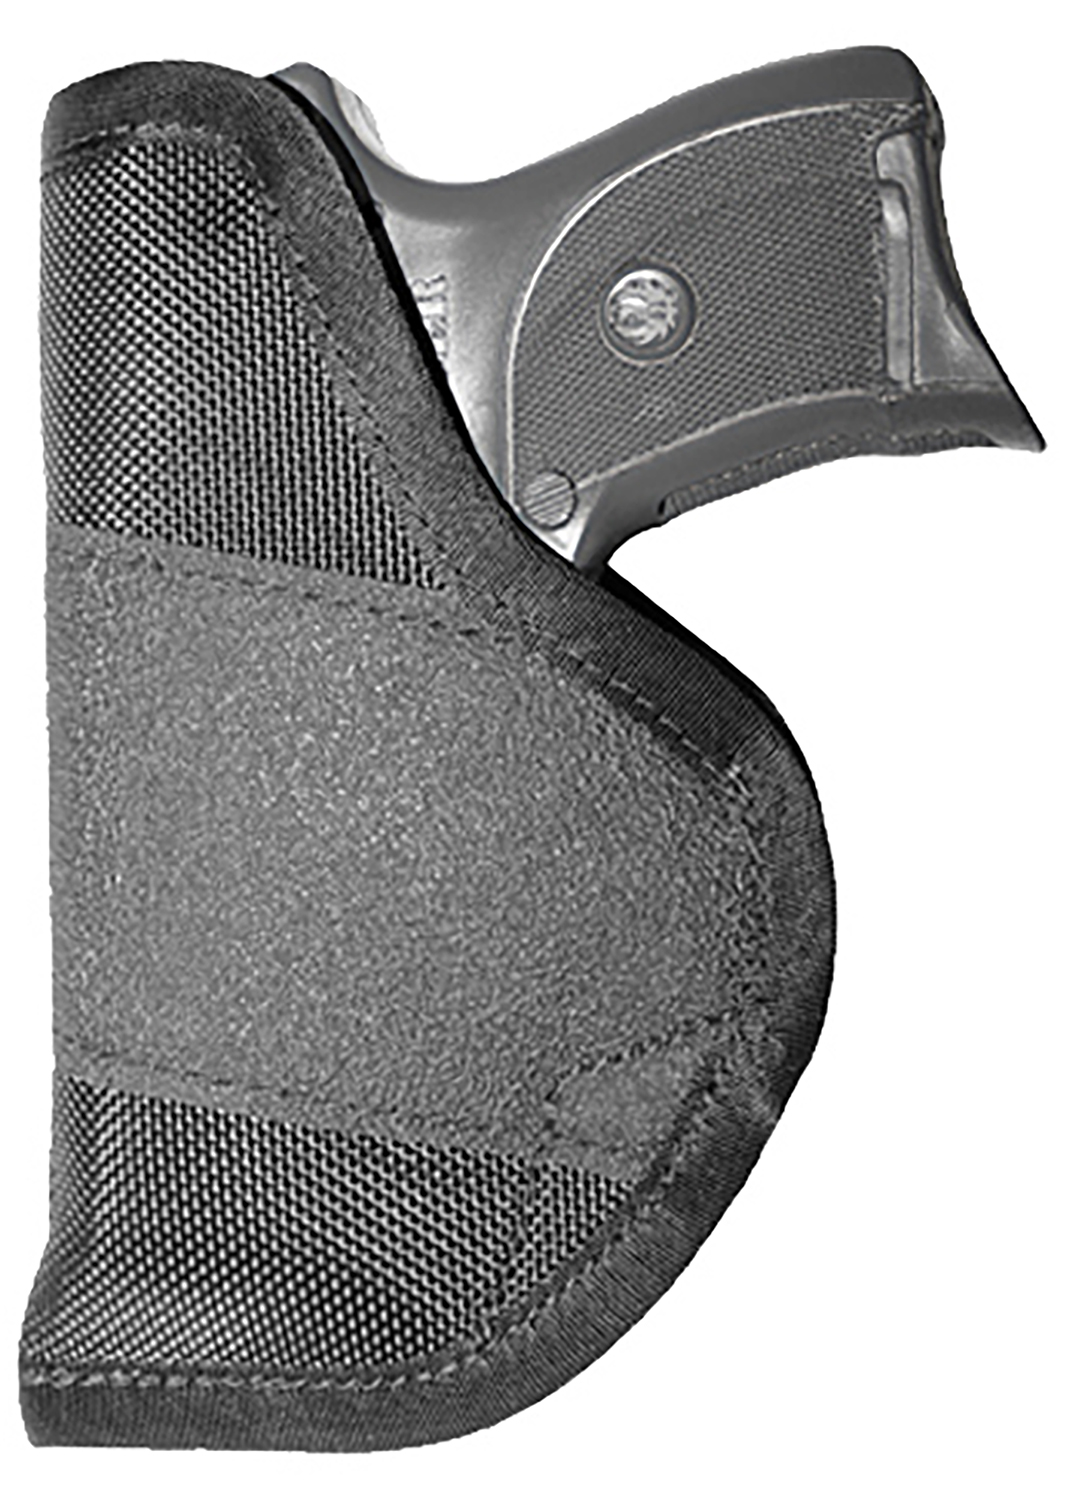 Crossfire Shooting Gear CRF-GRPSA1M-1 The Grip Holster 01 Black Rubber Grip Fabric/ 1680 Denier Ballistic Nylon IWB/Pocket 1-1.5